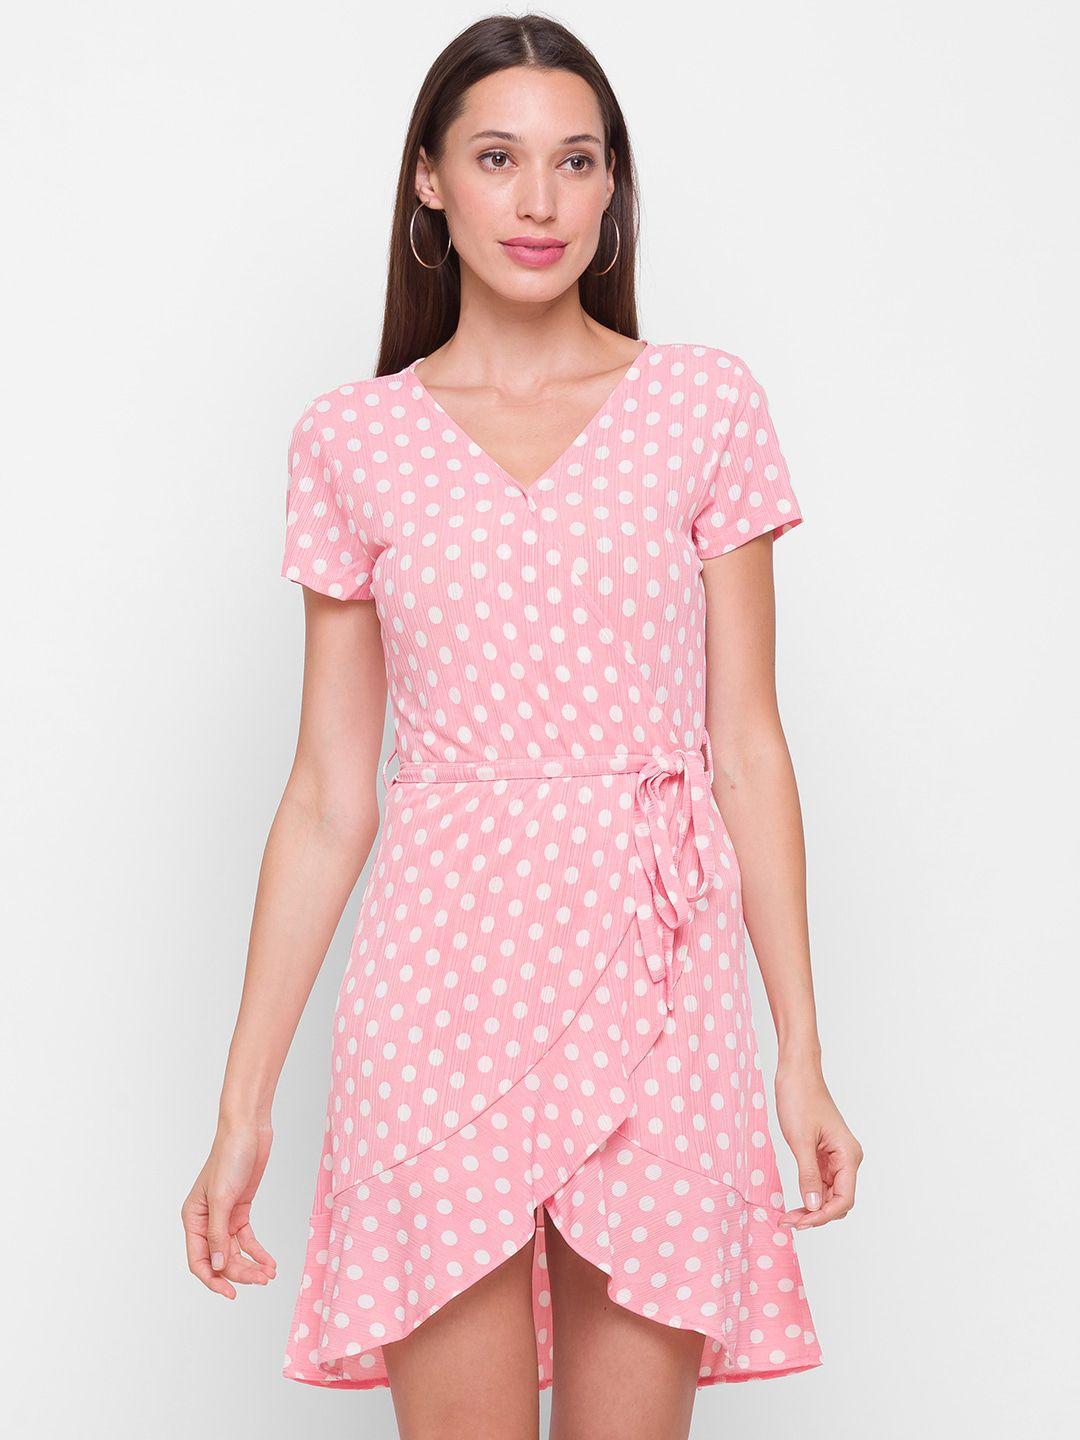 globus pink & white polka dot printed belted cotton dress